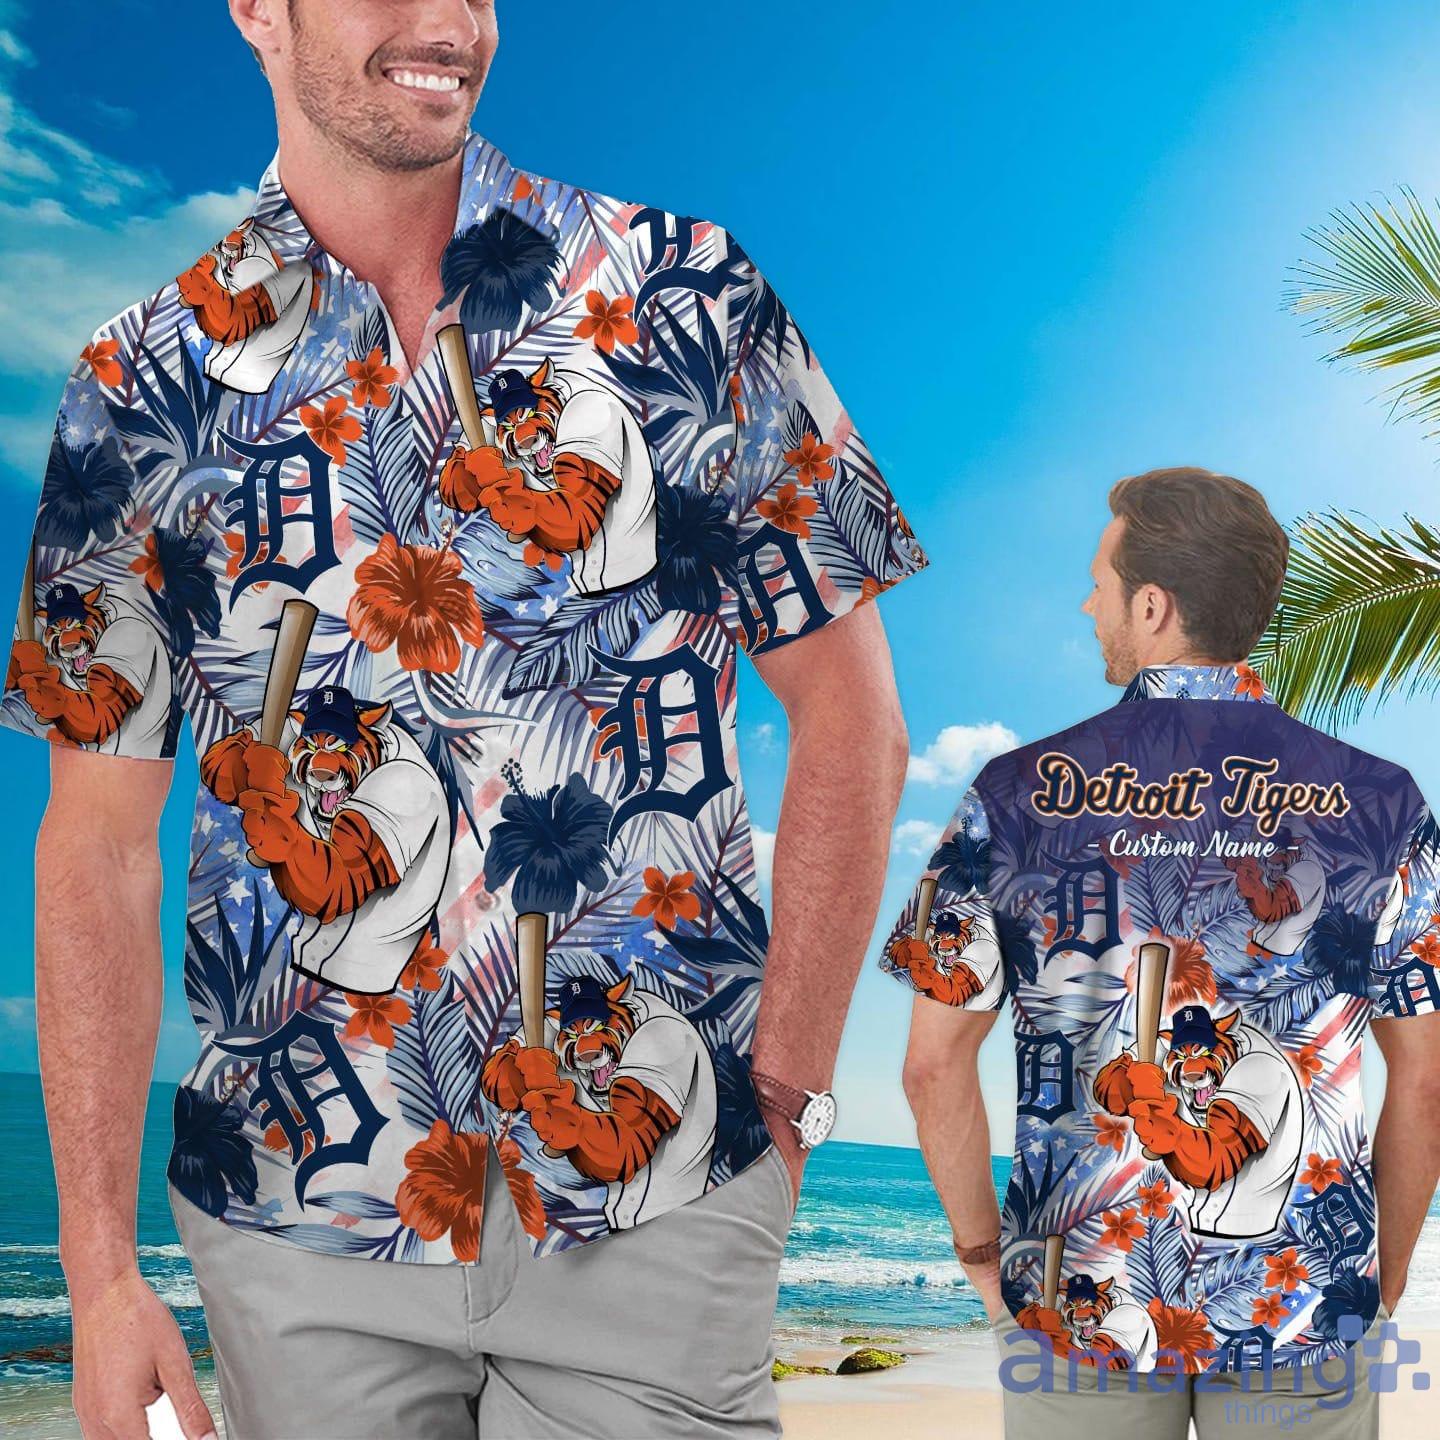 detroit tigers custom shirt